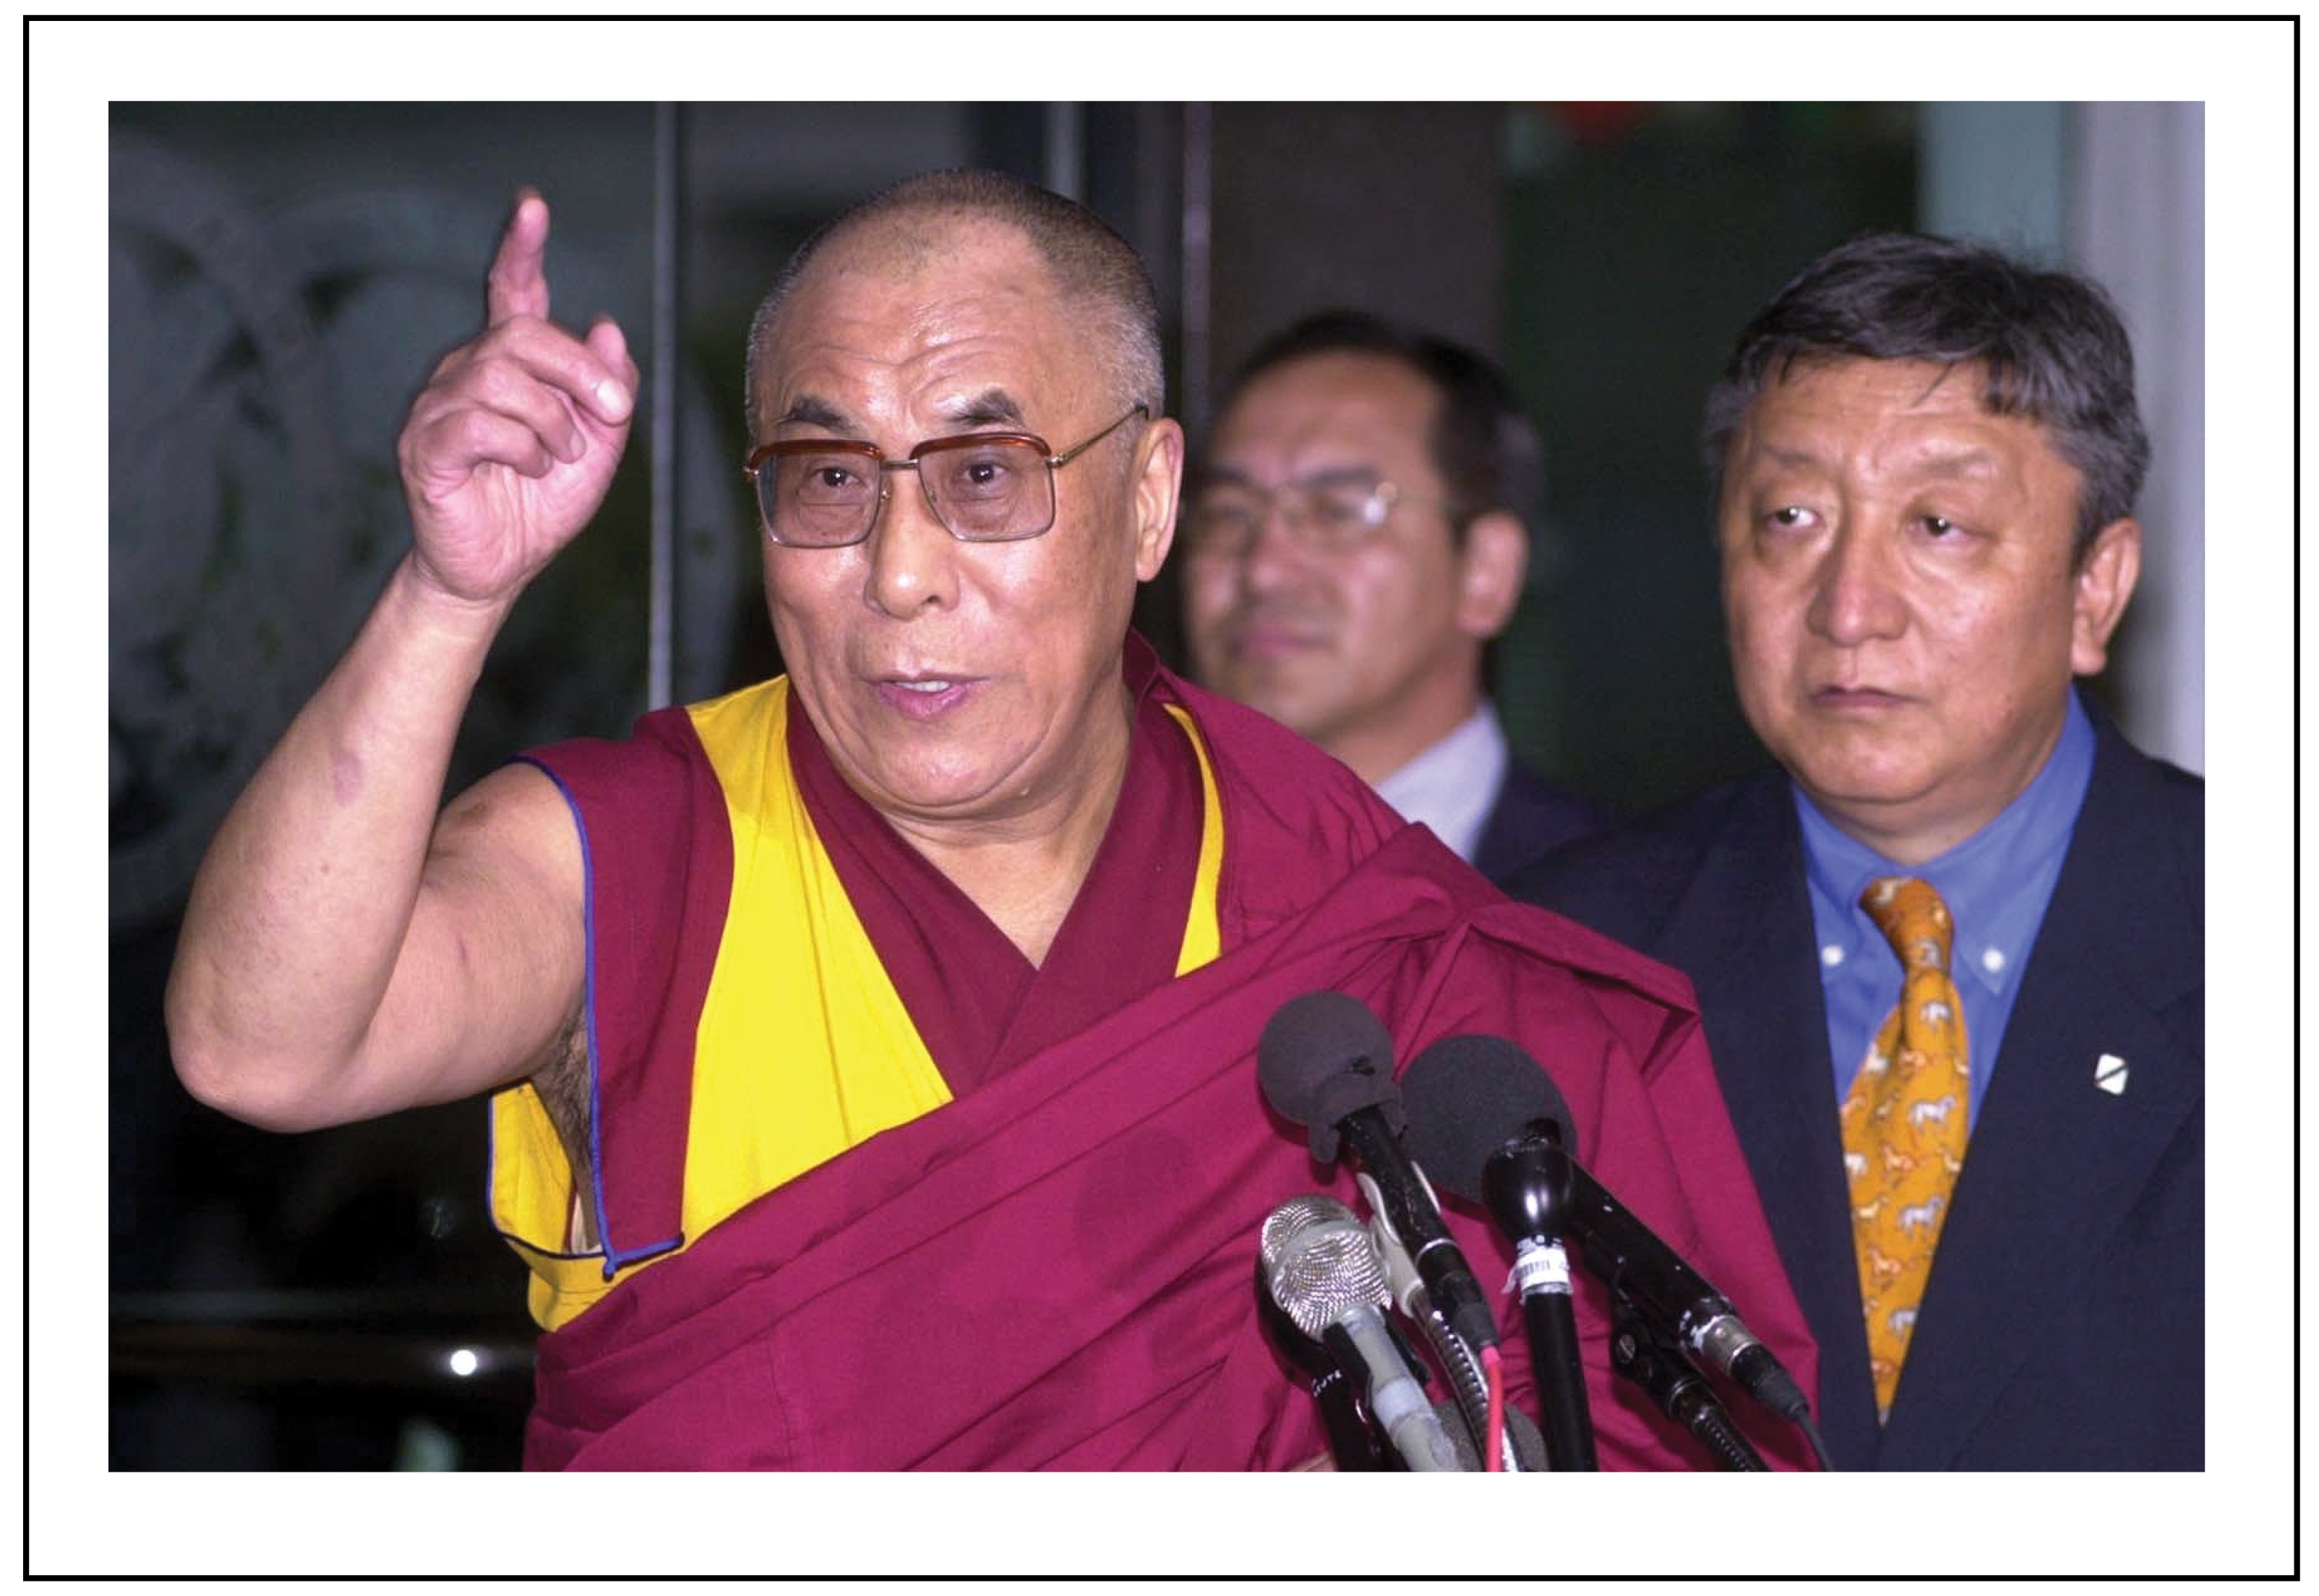 His Holiness Dalai Lama and Lodi Gyaltsen Gyari Rinpoche founder of the Conservancy for Tibetan Art & Culture